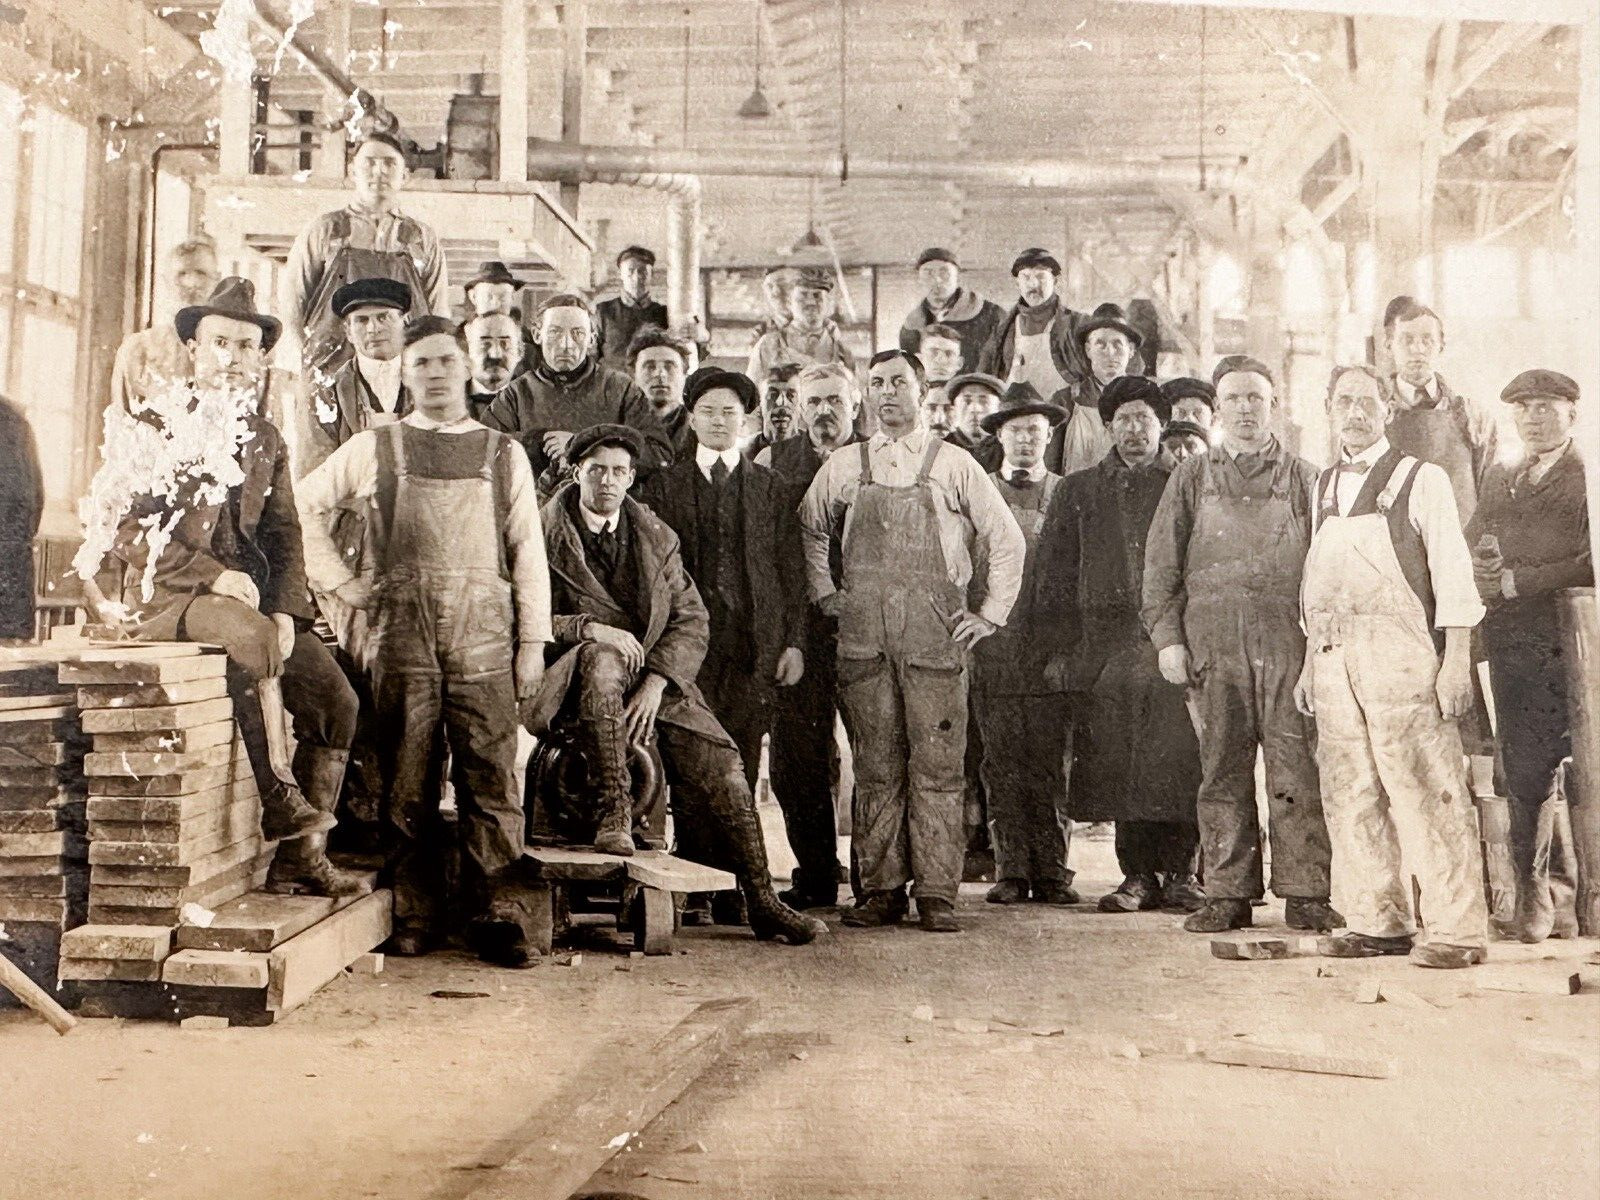 Photograph Vintage Warehouse Construction Workers Group Photo Men 1920s